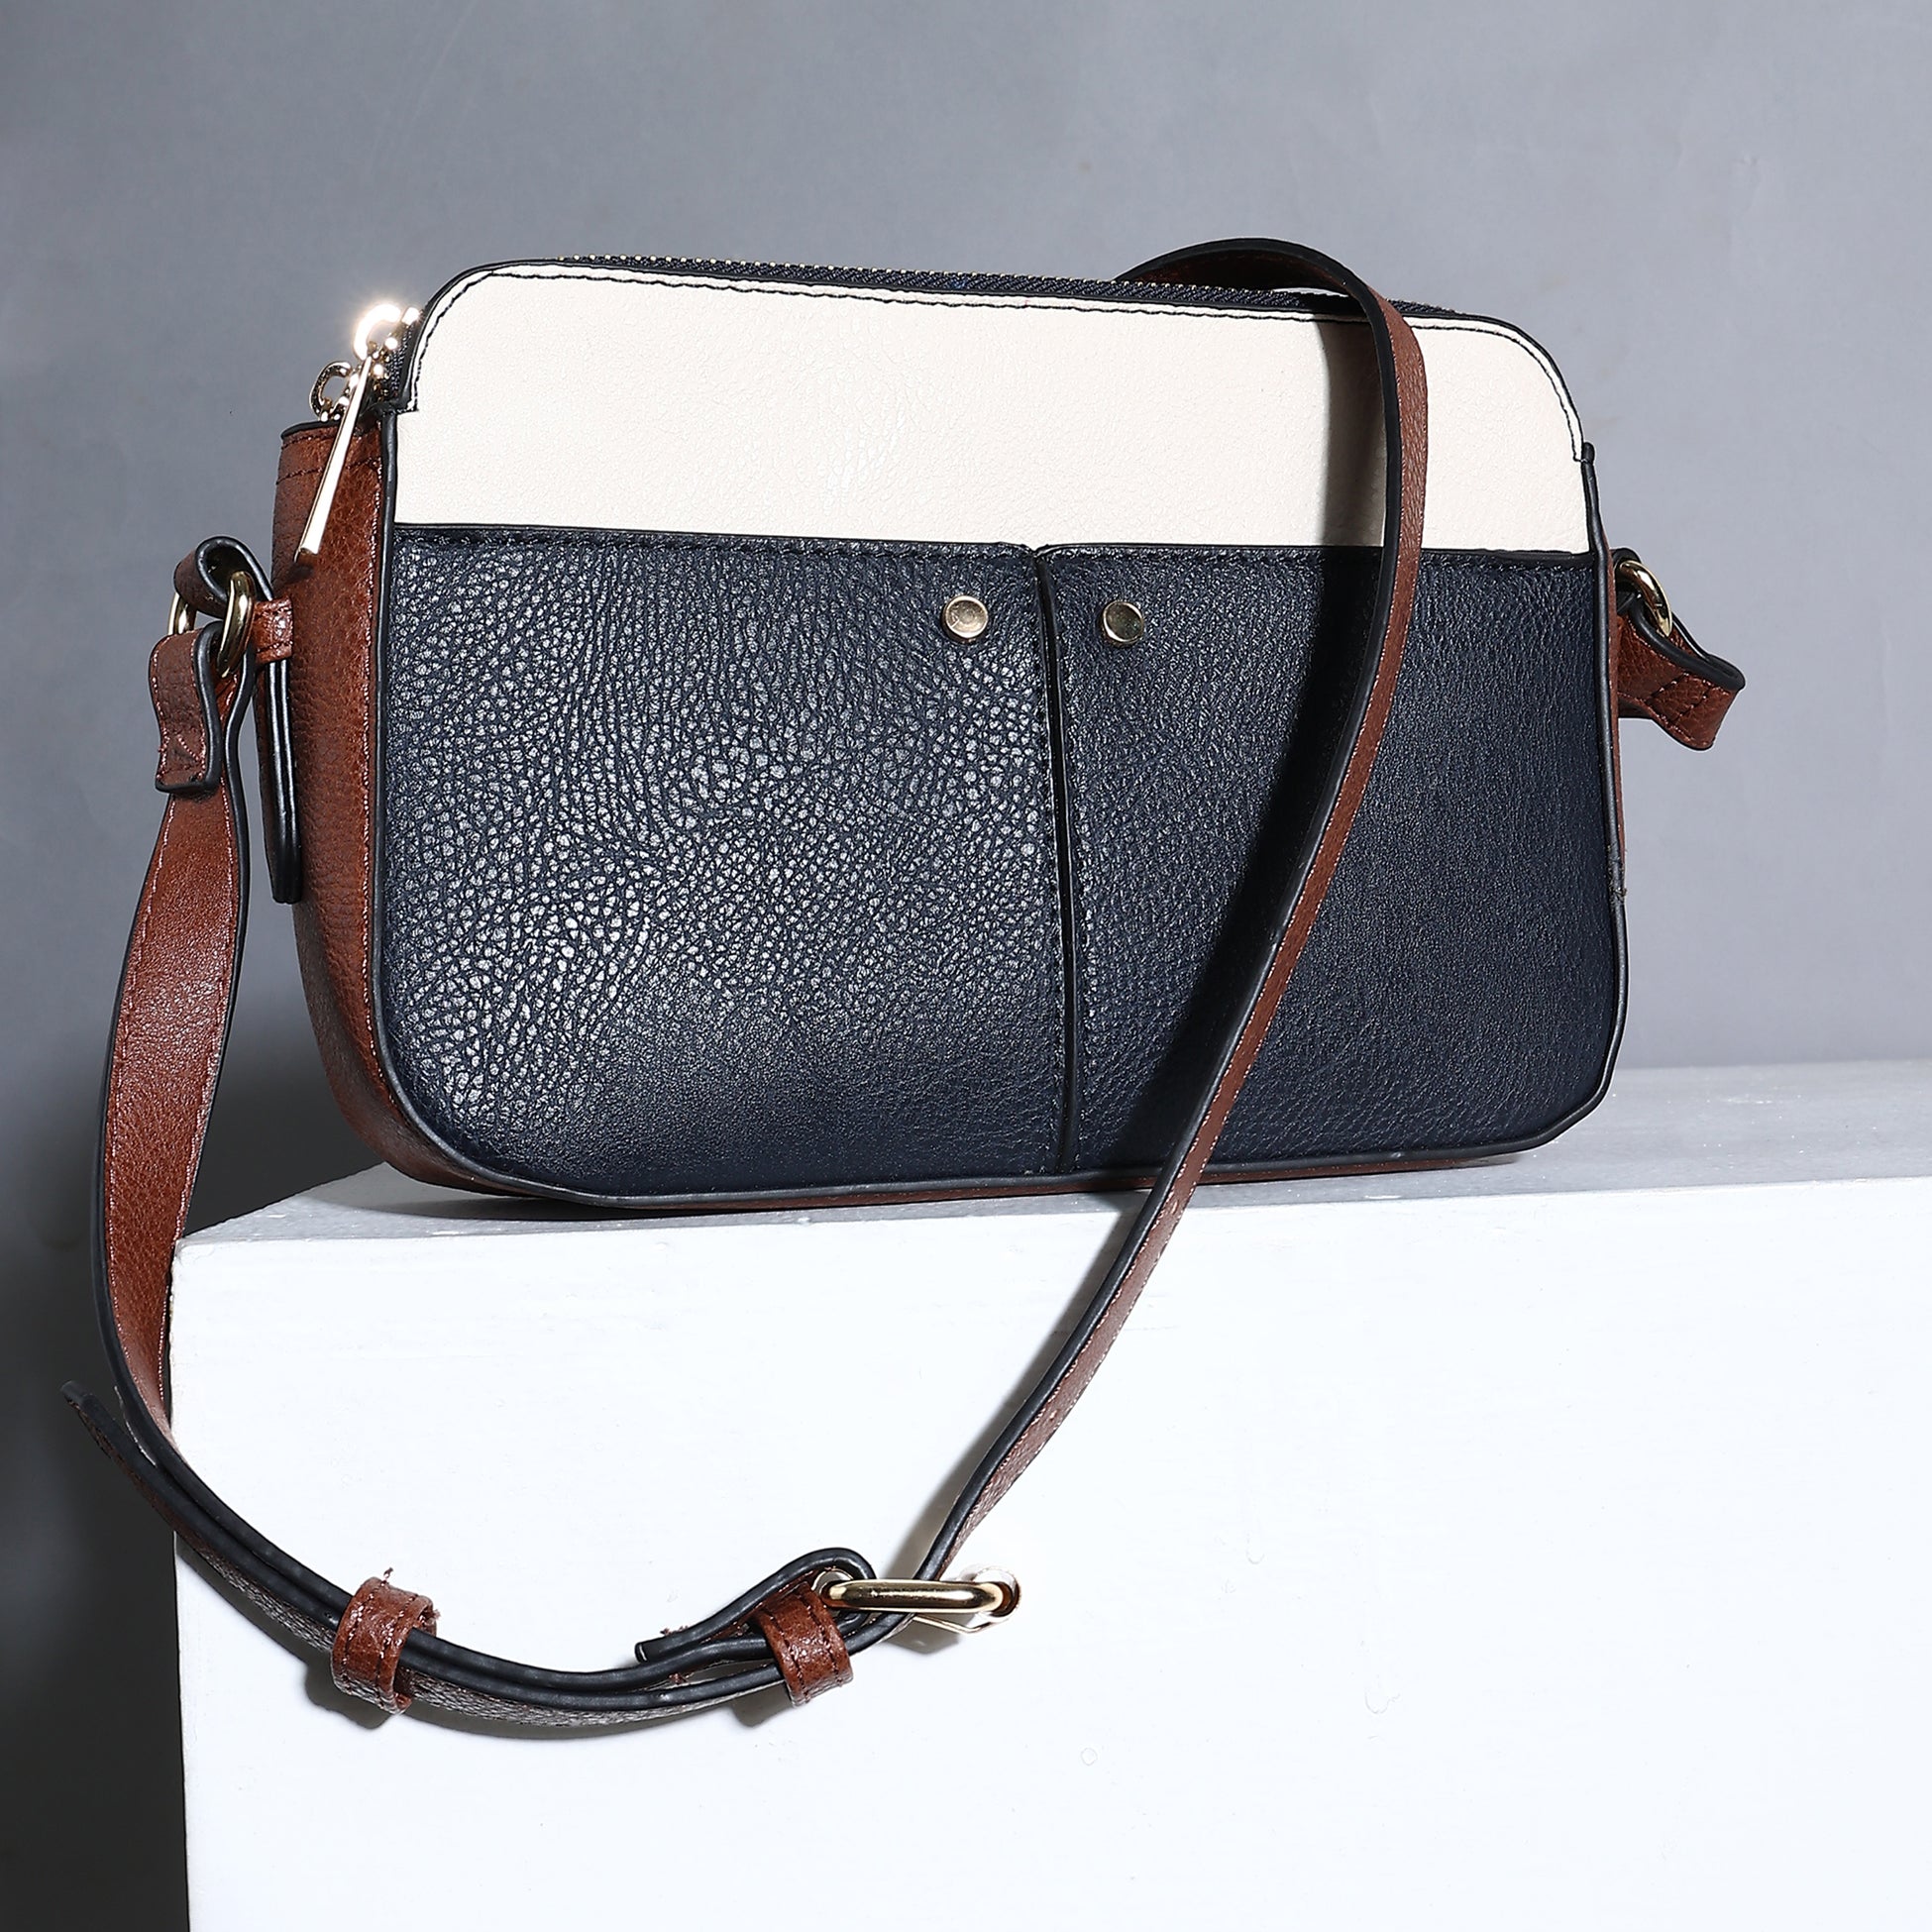 Buy Charlotte Blue & White Sling Bag Online - Accessorize India